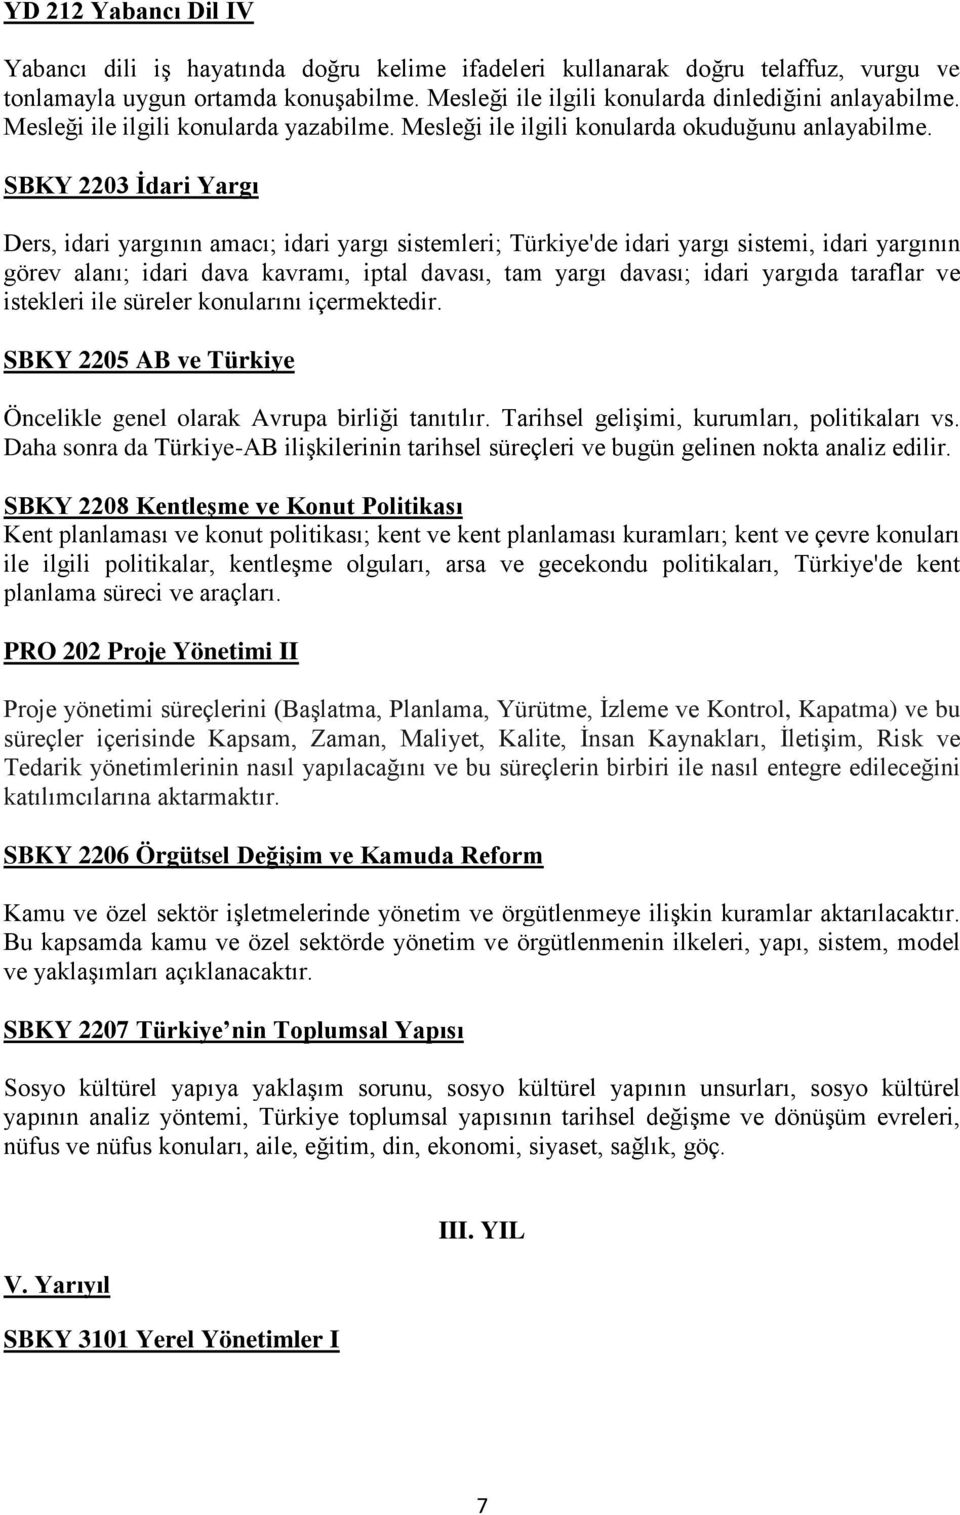 SBKY 2203 İdari Yargı Ders, idari yargının amacı; idari yargı sistemleri; Türkiye'de idari yargı sistemi, idari yargının görev alanı; idari dava kavramı, iptal davası, tam yargı davası; idari yargıda